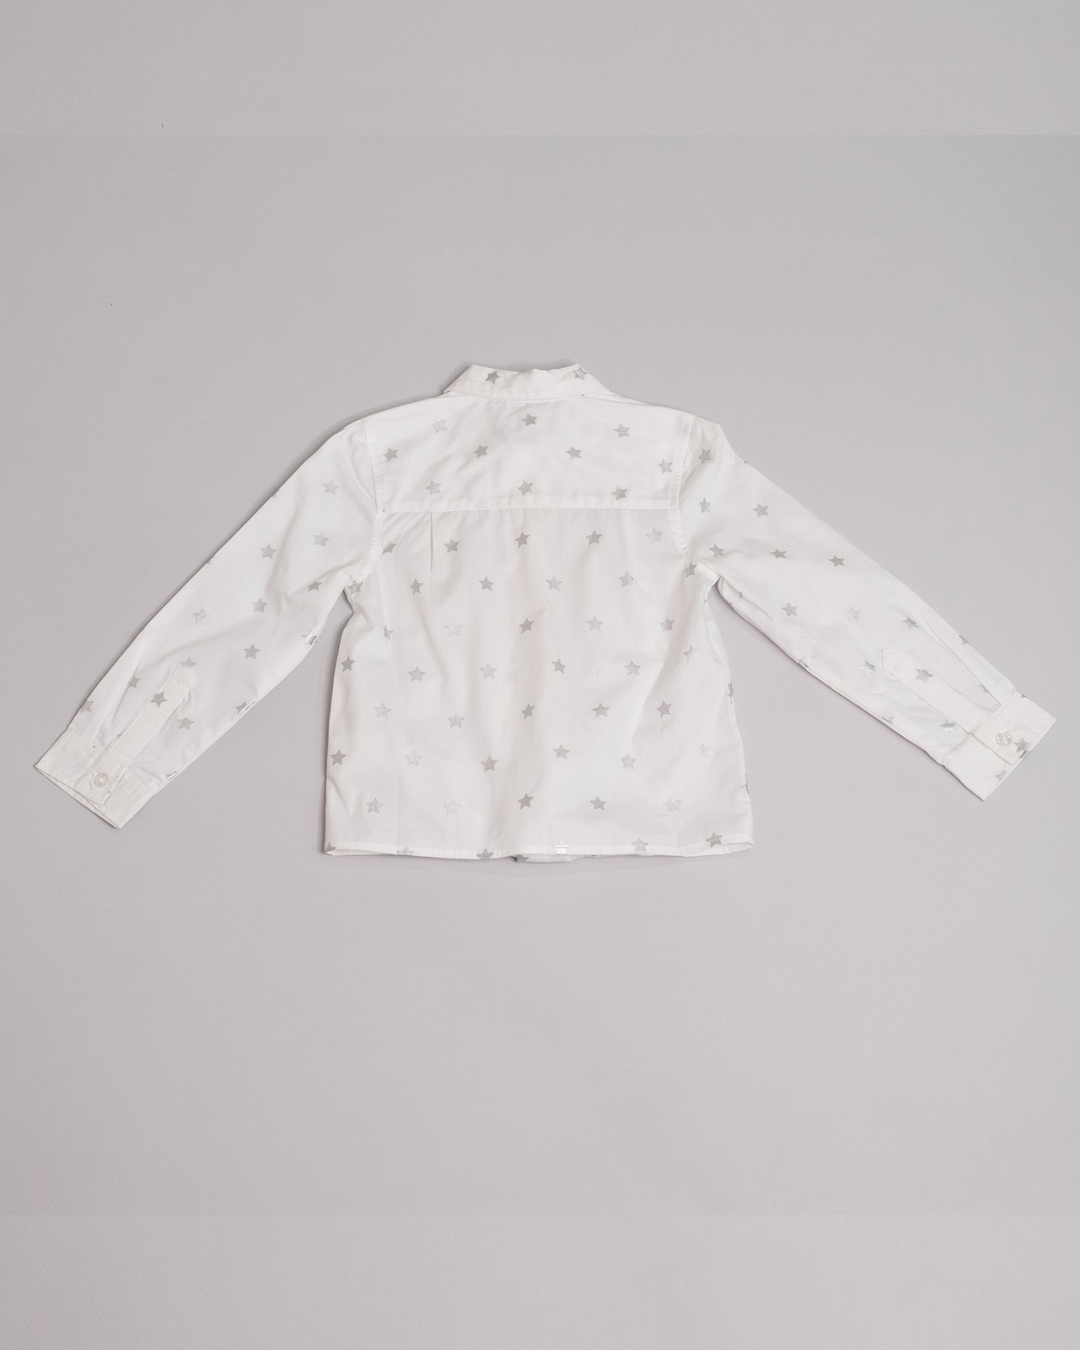 Blusa manga larga blanca con estampado de estrellas plateadas